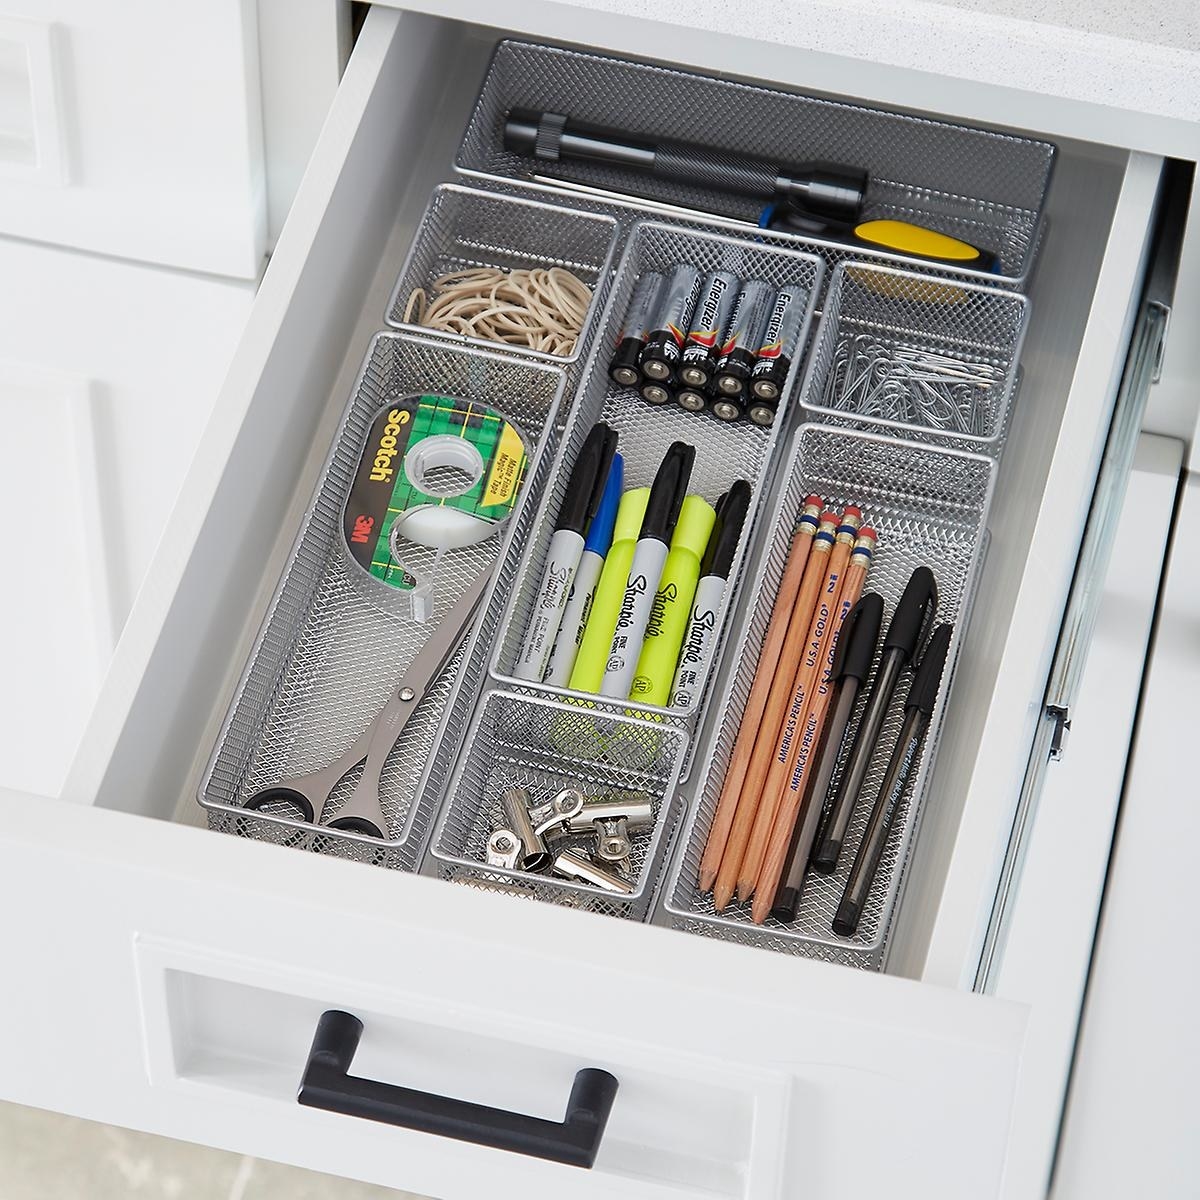 The drawer organizer